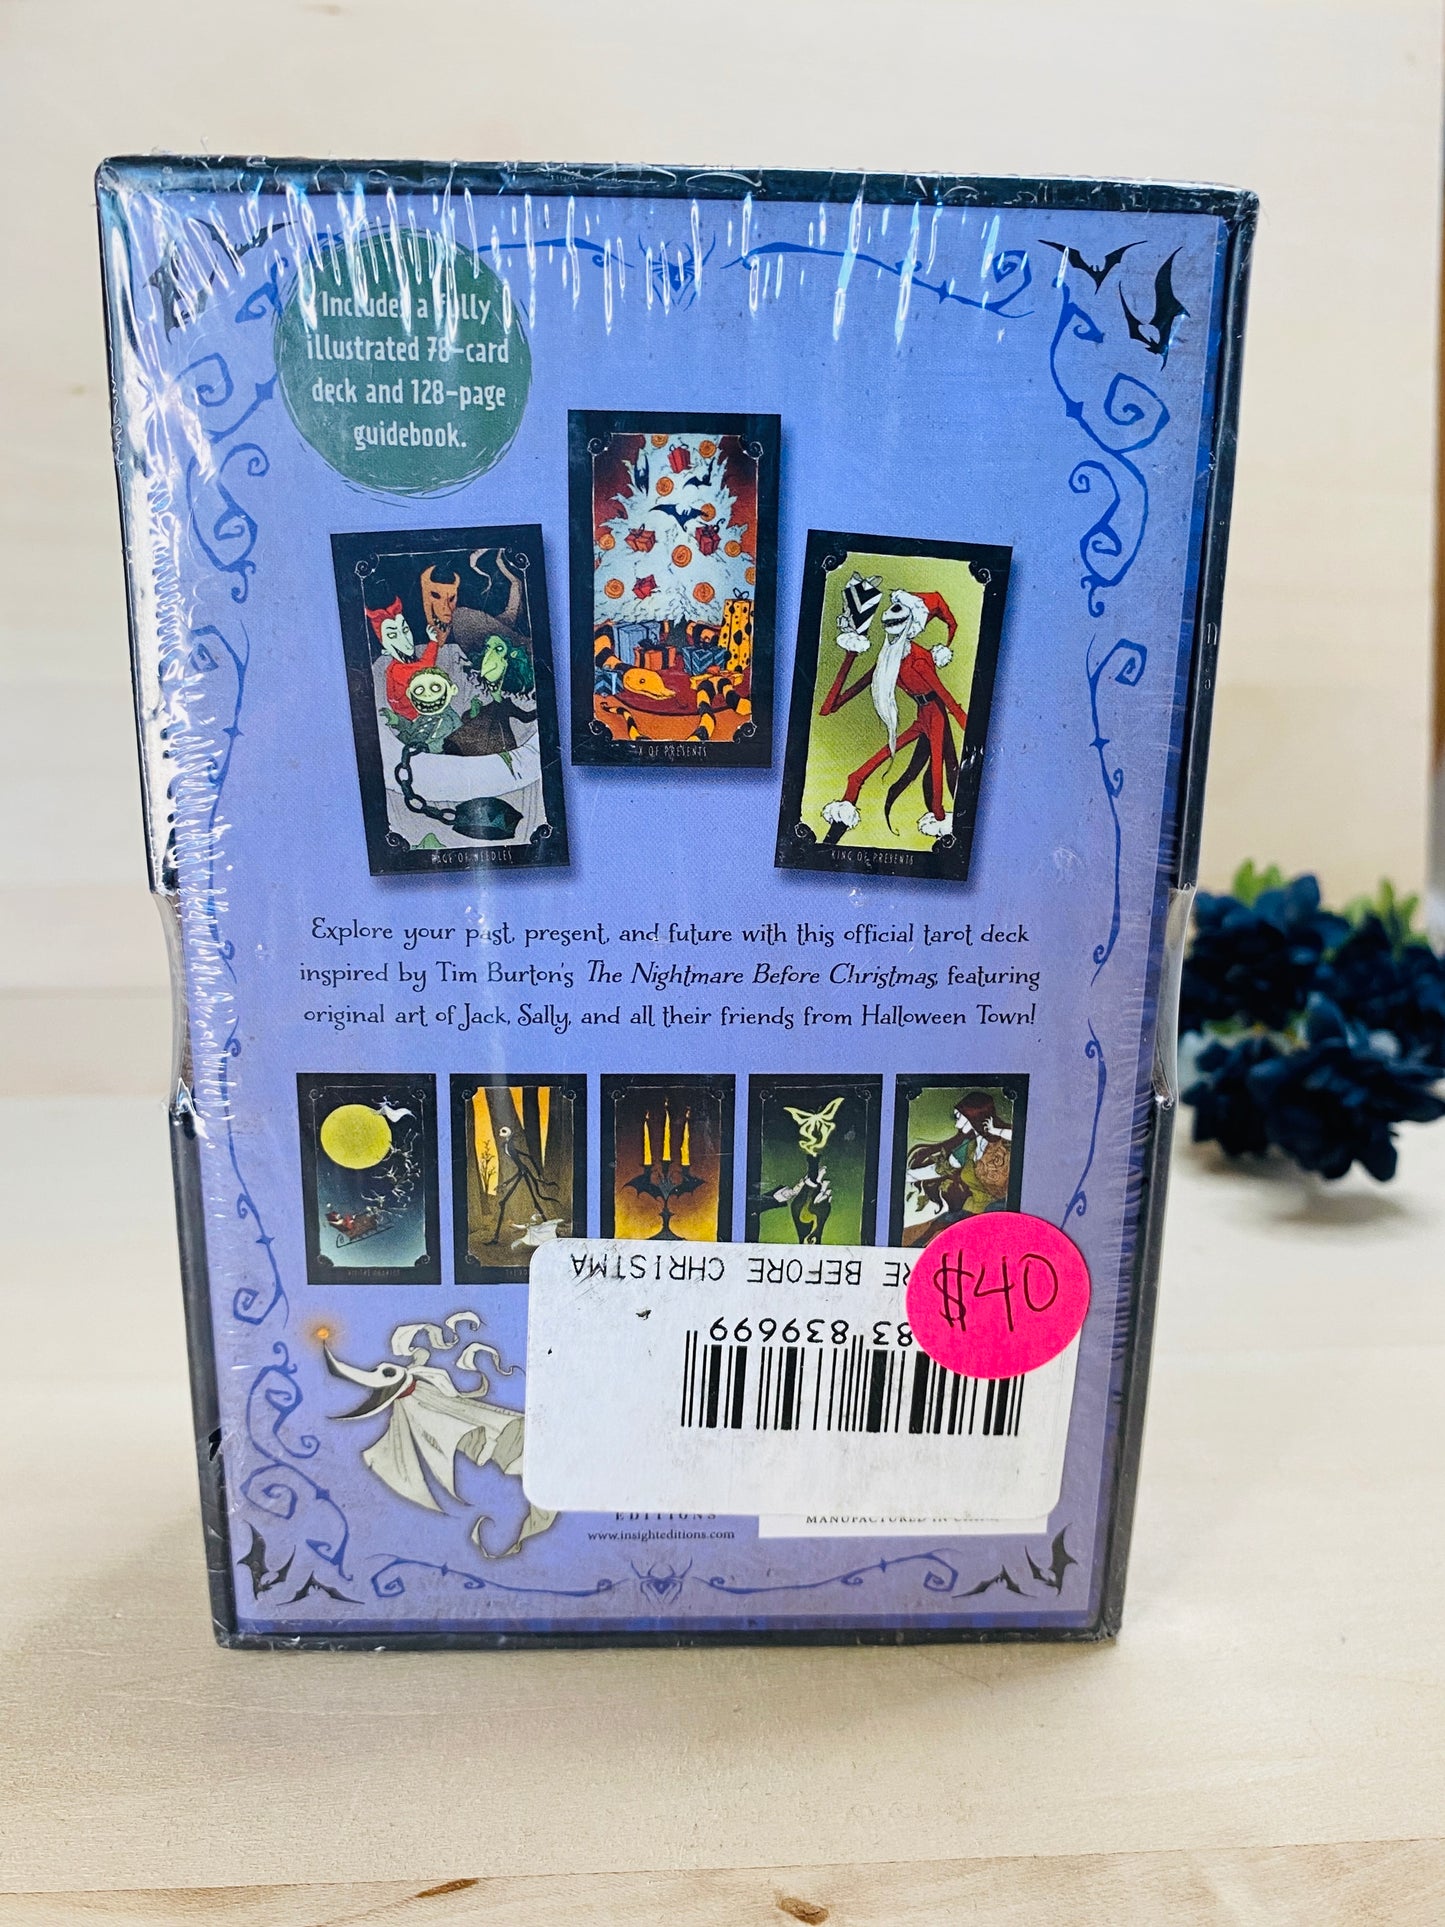 The Nightmare Before Christmas Tarot Deck & Guidebook